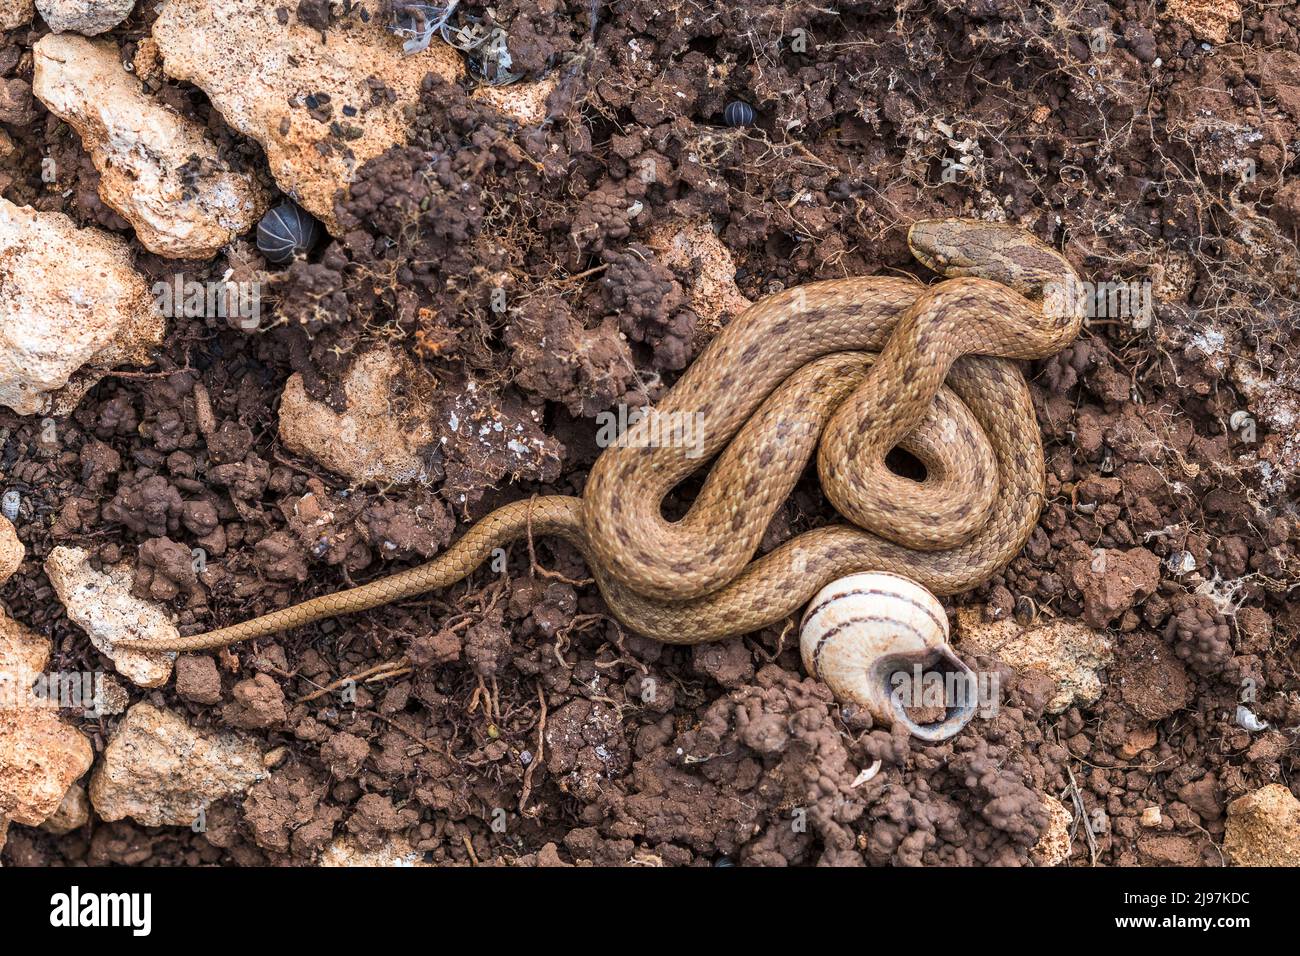 False Smooth Snake (Macroprotodon mauritanicus). Stock Photo